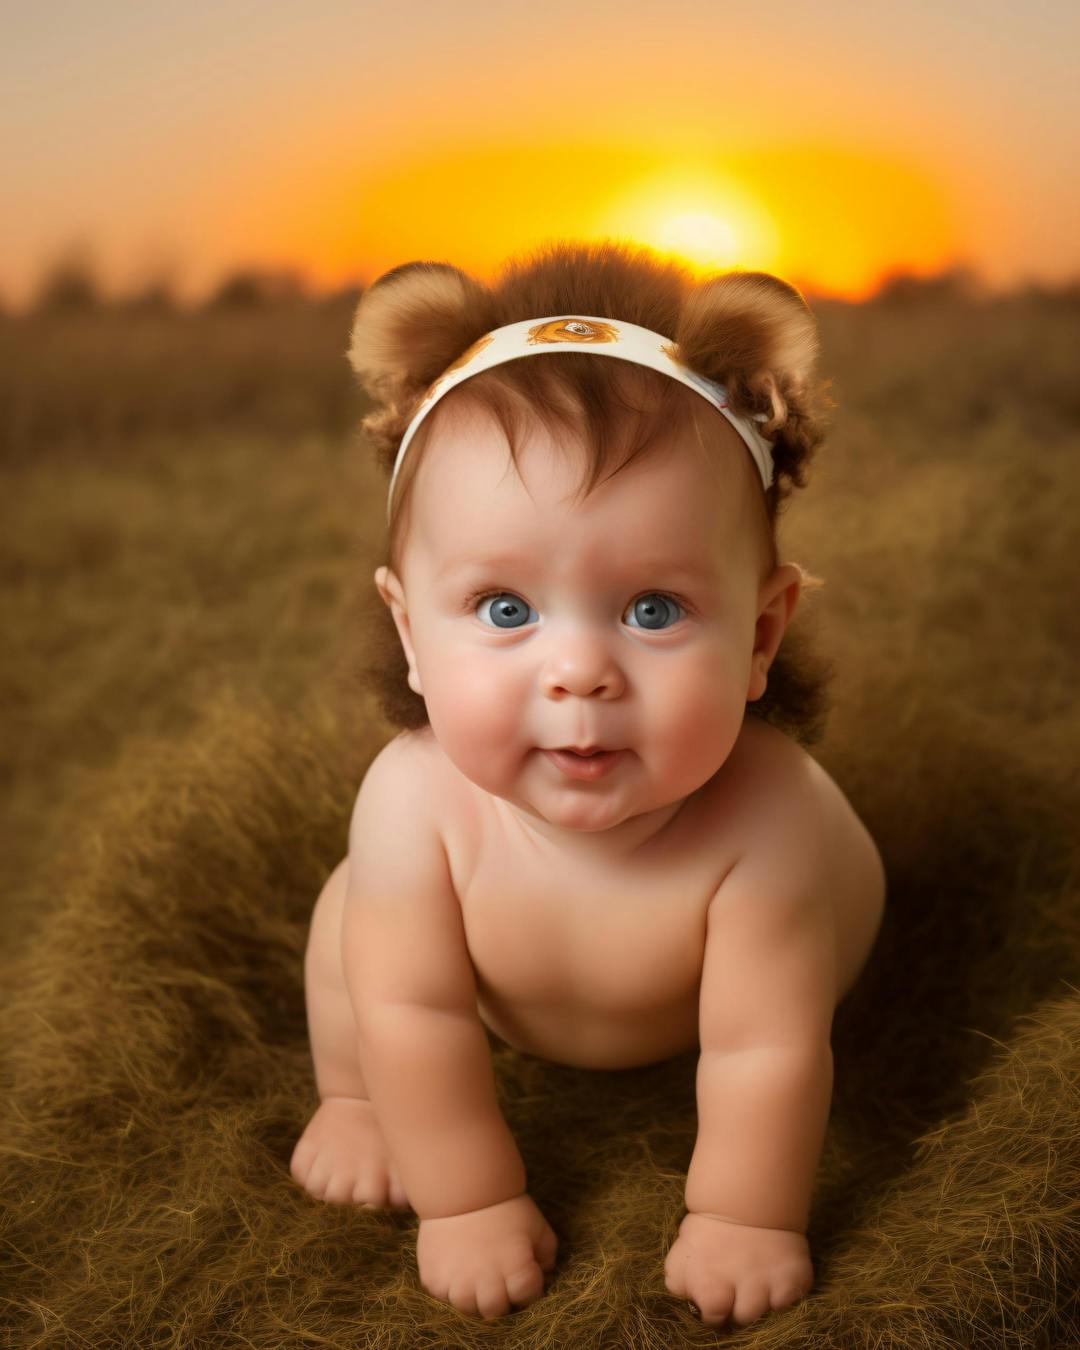 Zawwad Ul Sami's testimonial for Beautiful Baby Photography without the Photoshoot